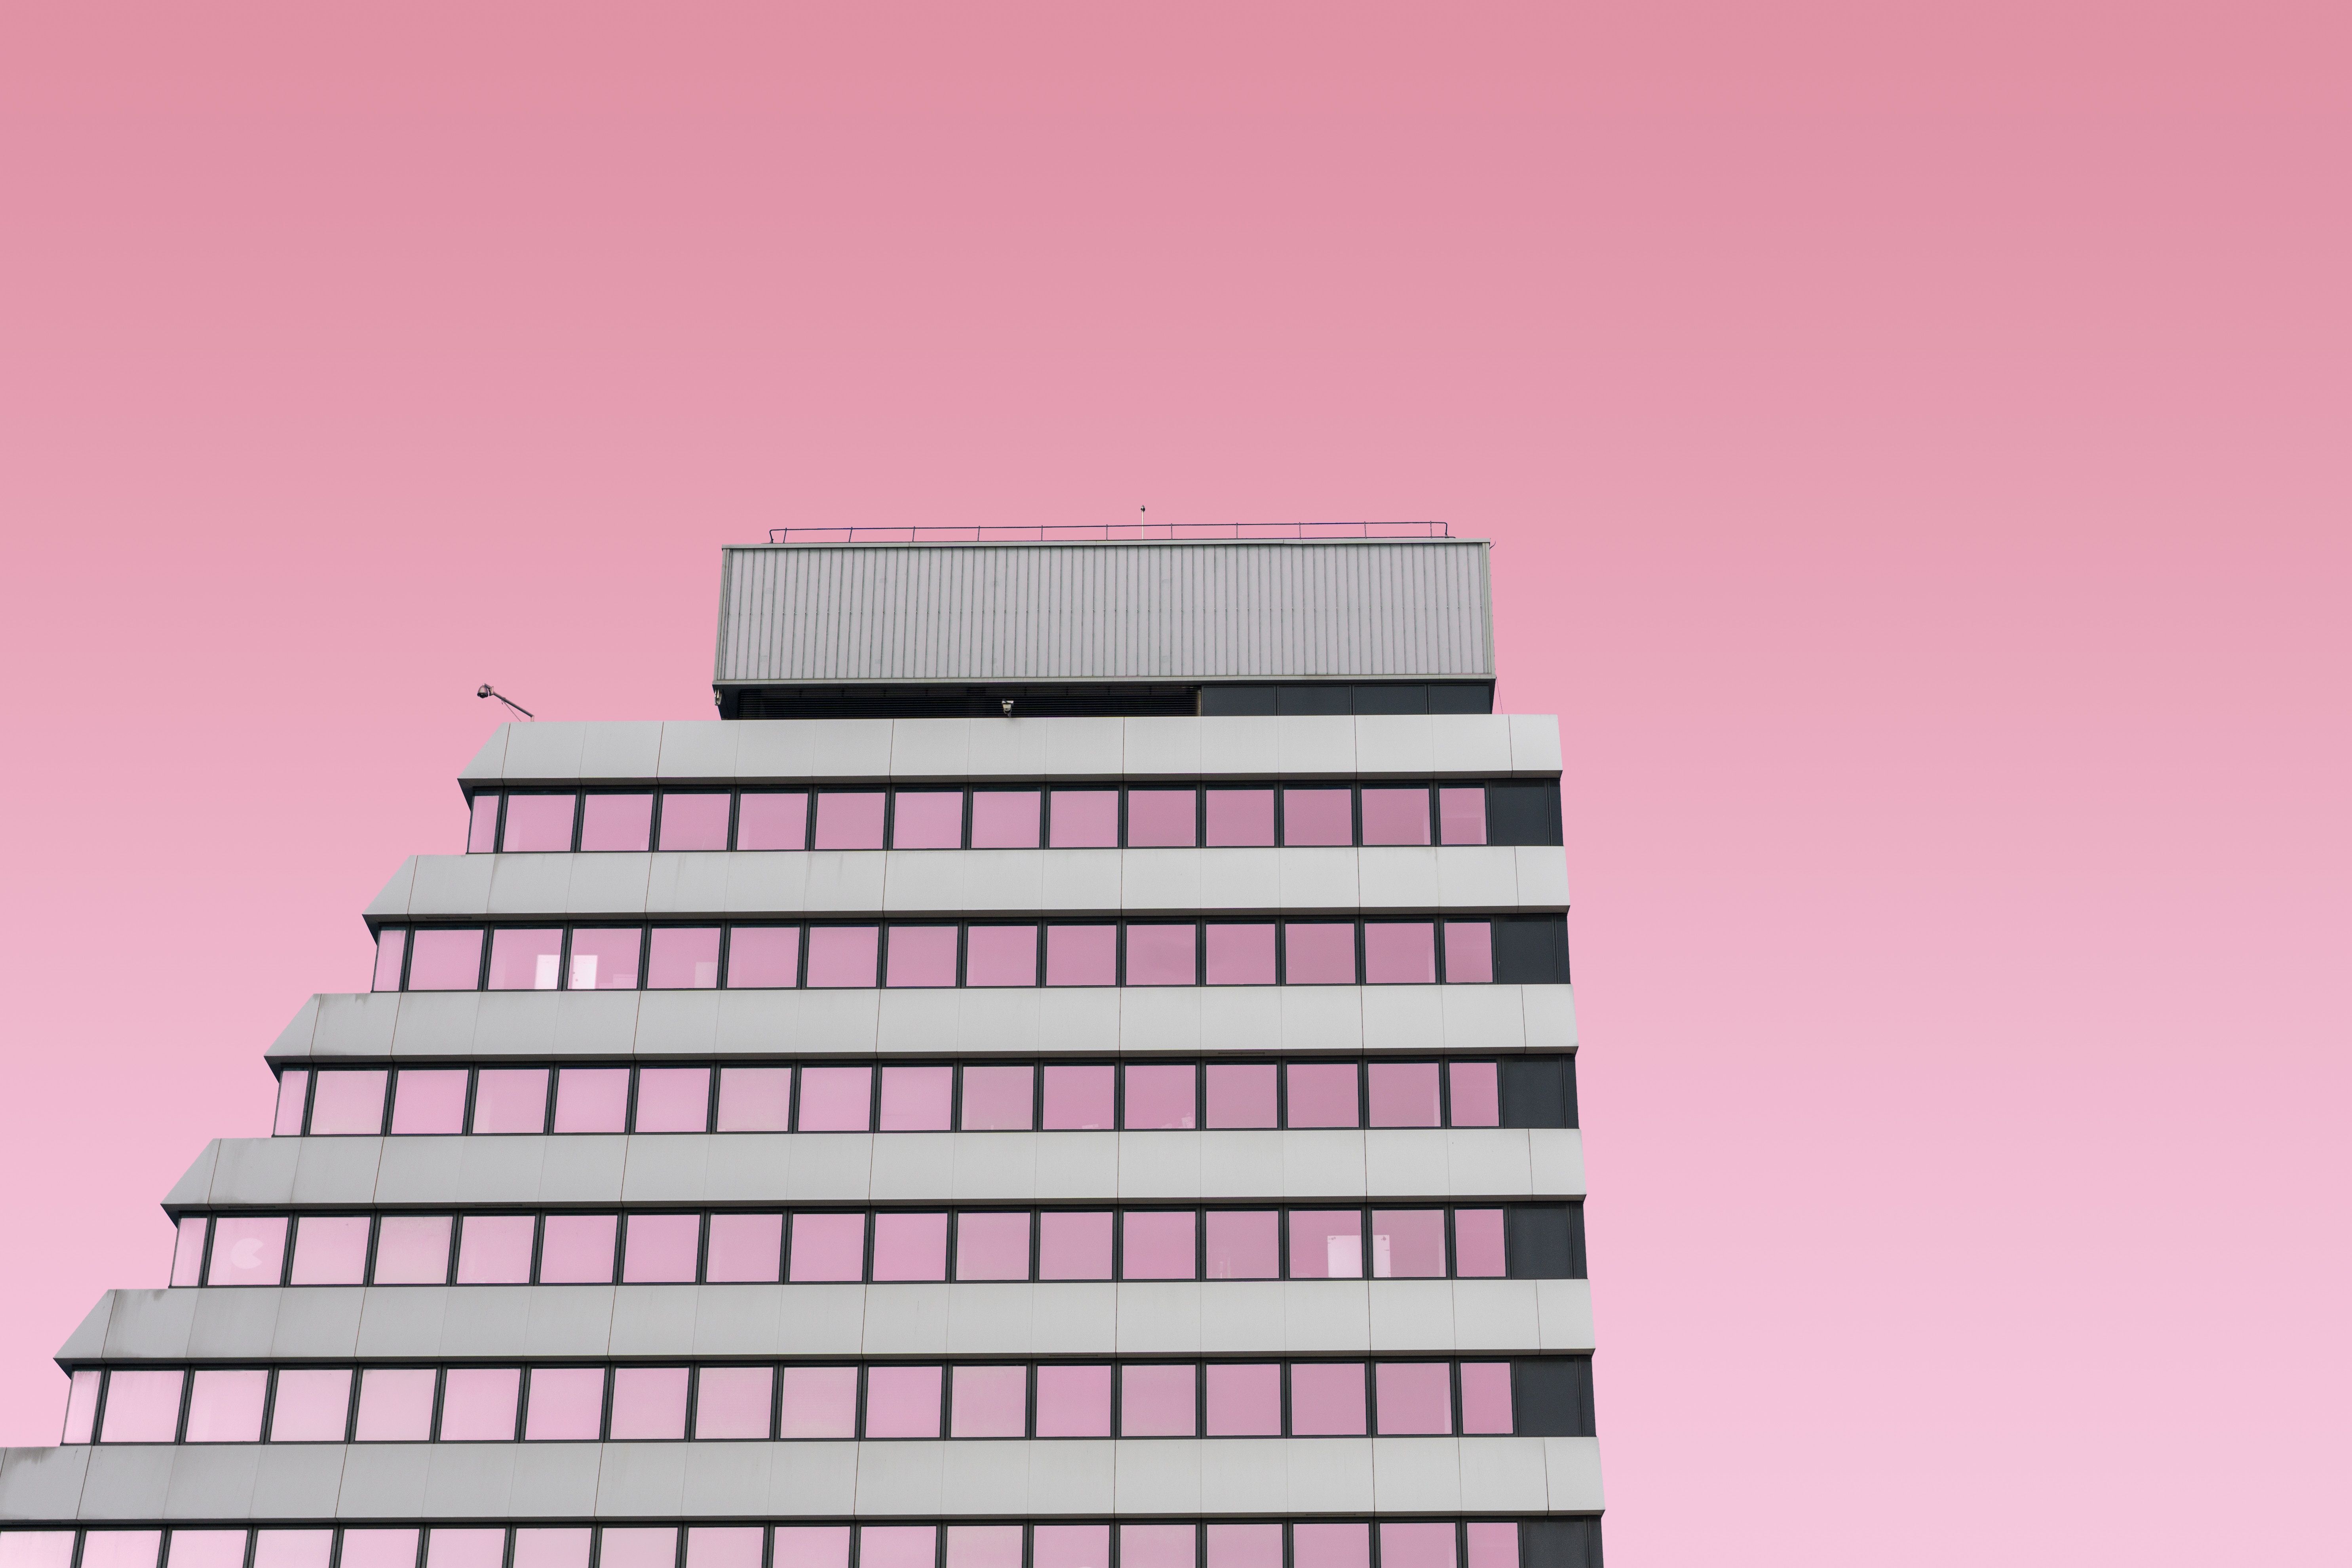 5941x3961 #sky, #minimalism, #gradient, #Creative Commons image, # minimalist, #building, #architecture, #minimal, #paris, #pink, #modern, #clean, #architectural, #window. Mocah.org HD Desktop Wallpaper